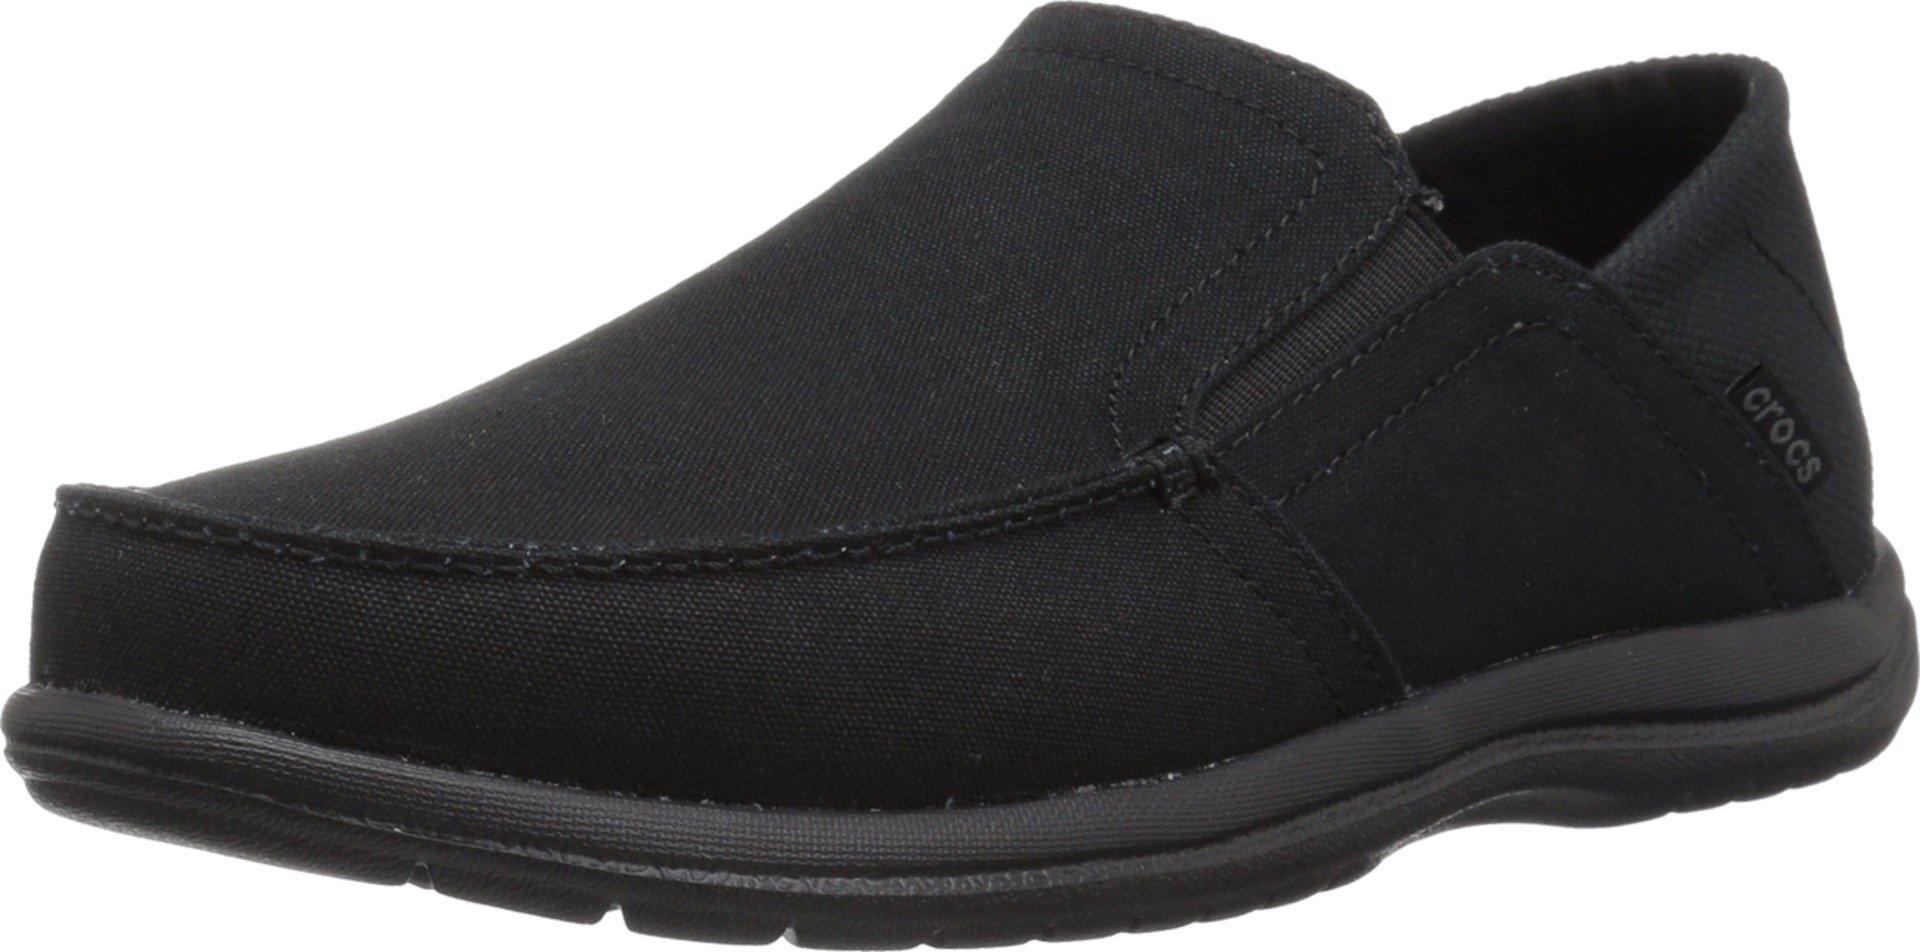 Crocs™ Cotton Santa Cruz Convertible Slip-on Loafer in Black/Black ...